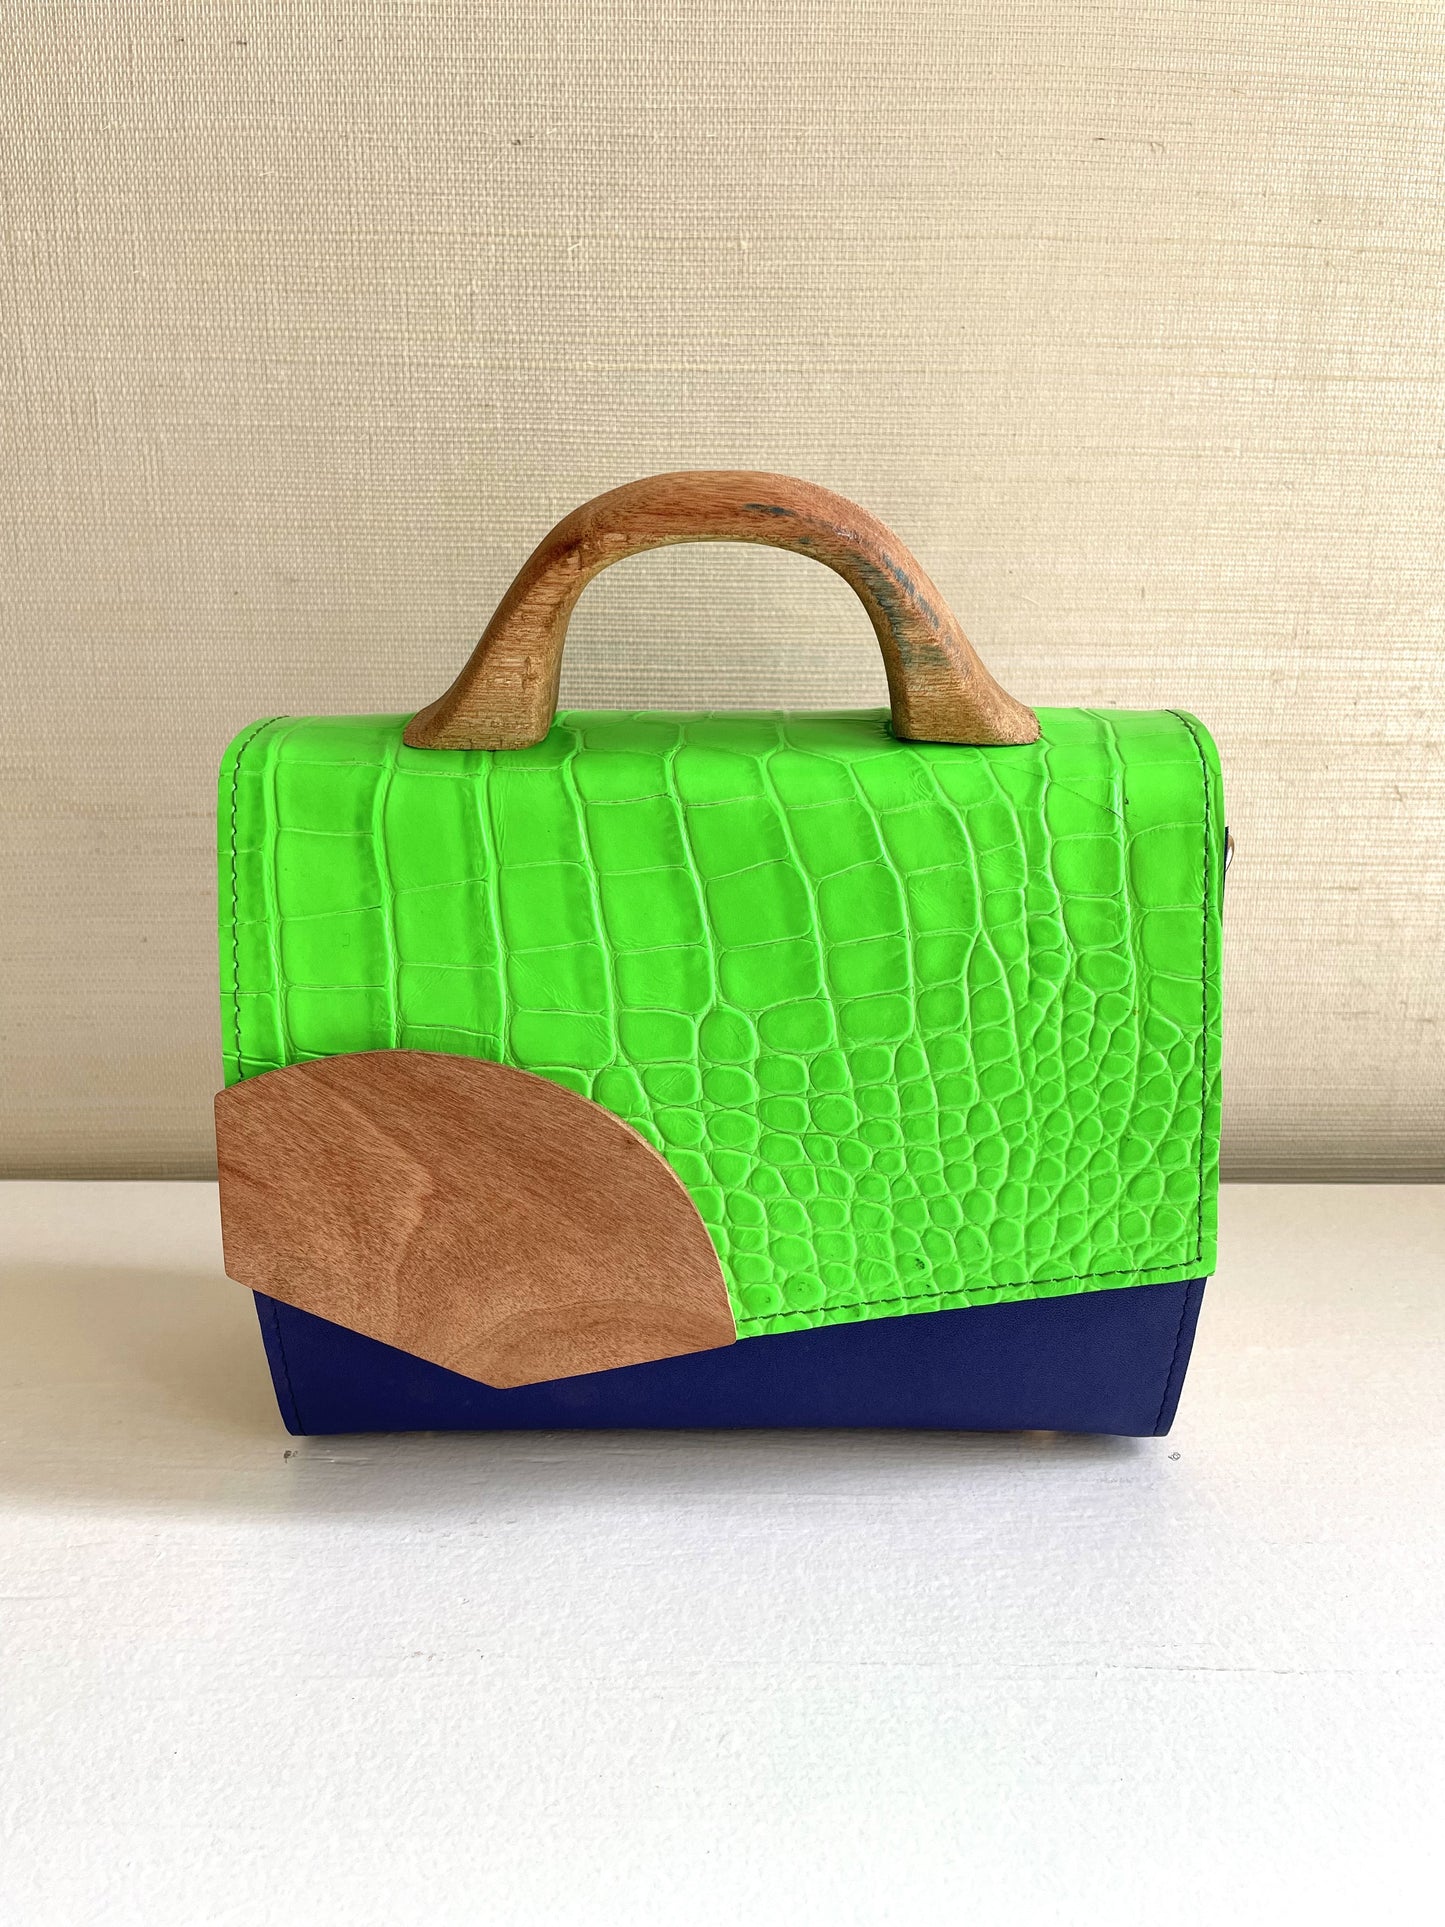 Neon Green Crocodile and Navy Handbag